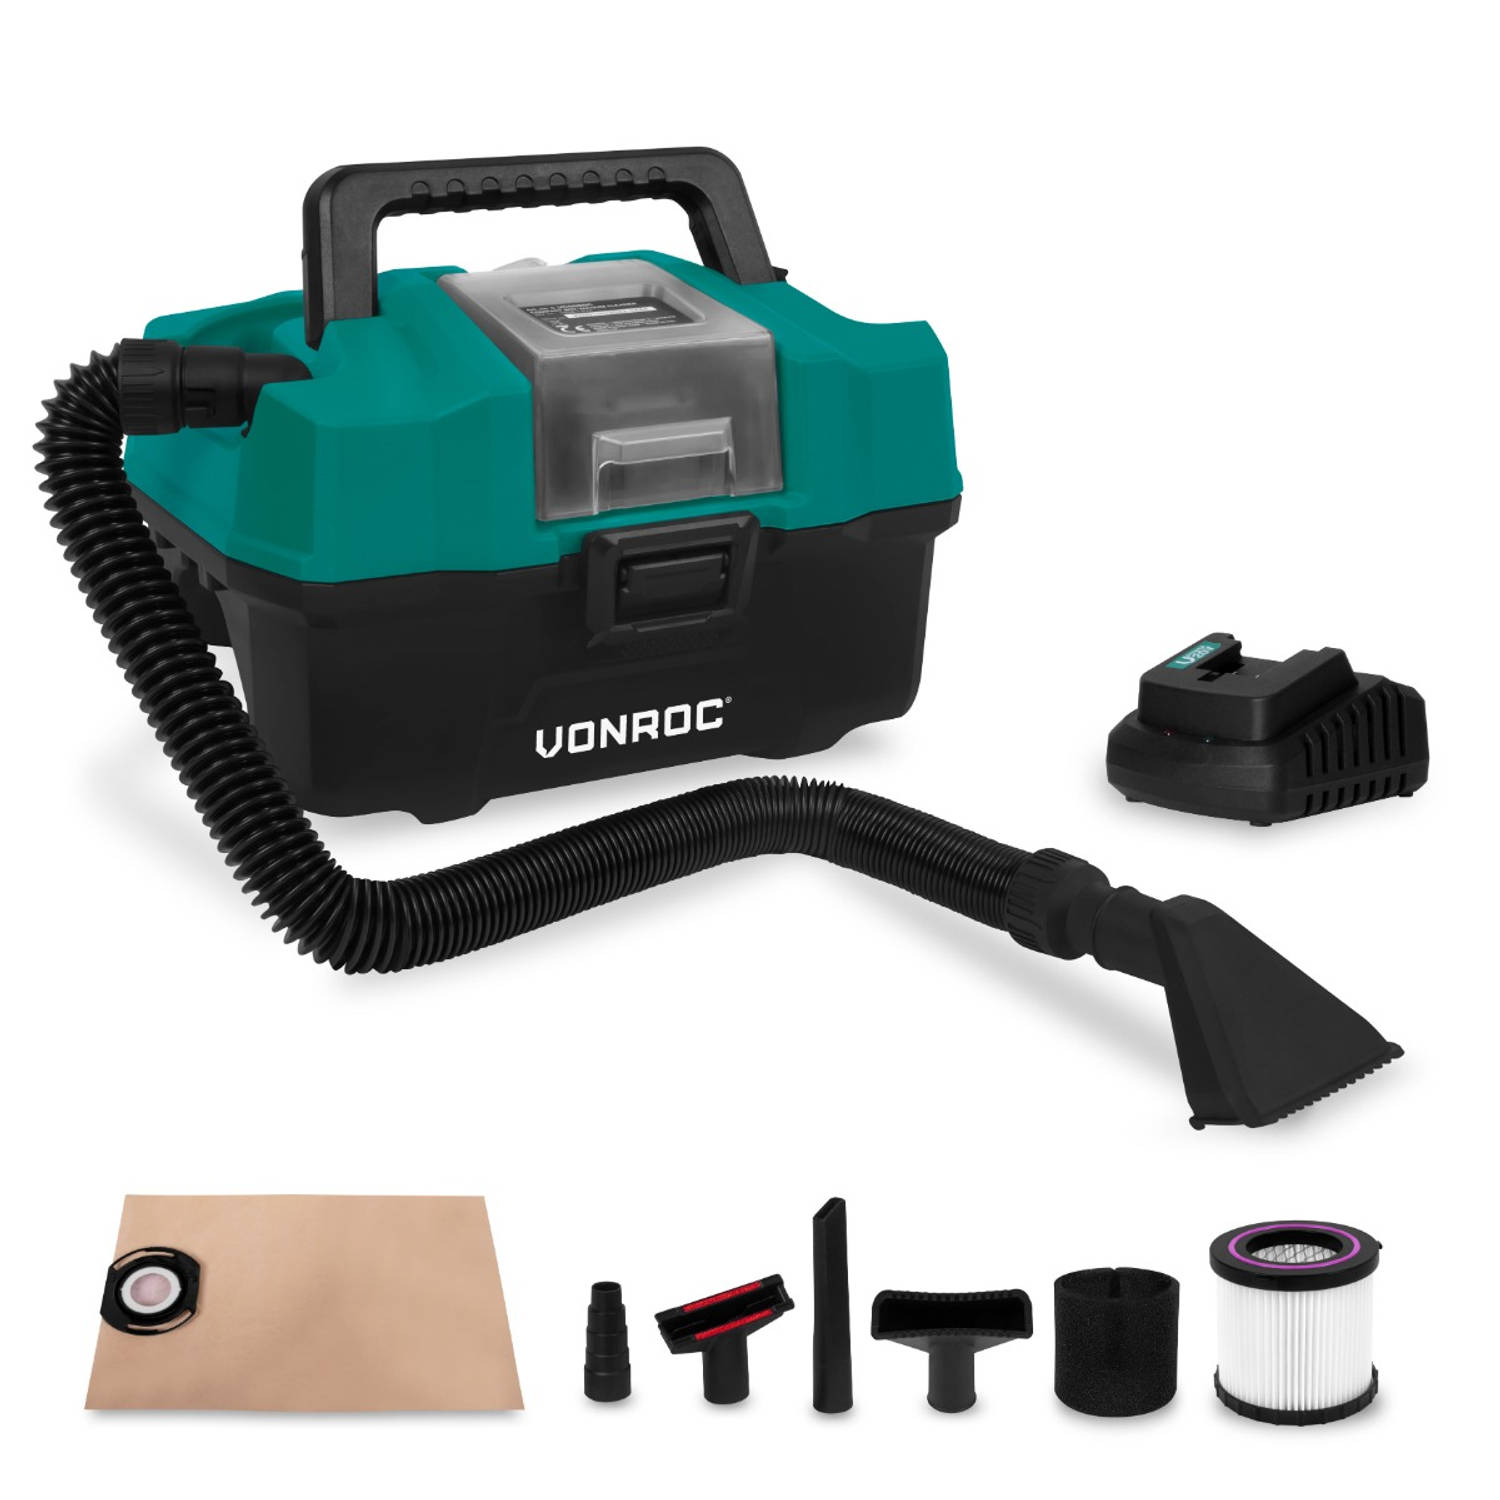 VONROC Compacte alleszuiger / stofzuiger - 20V - Incl. Diverse accessoires, 4.0Ah accu en snellader